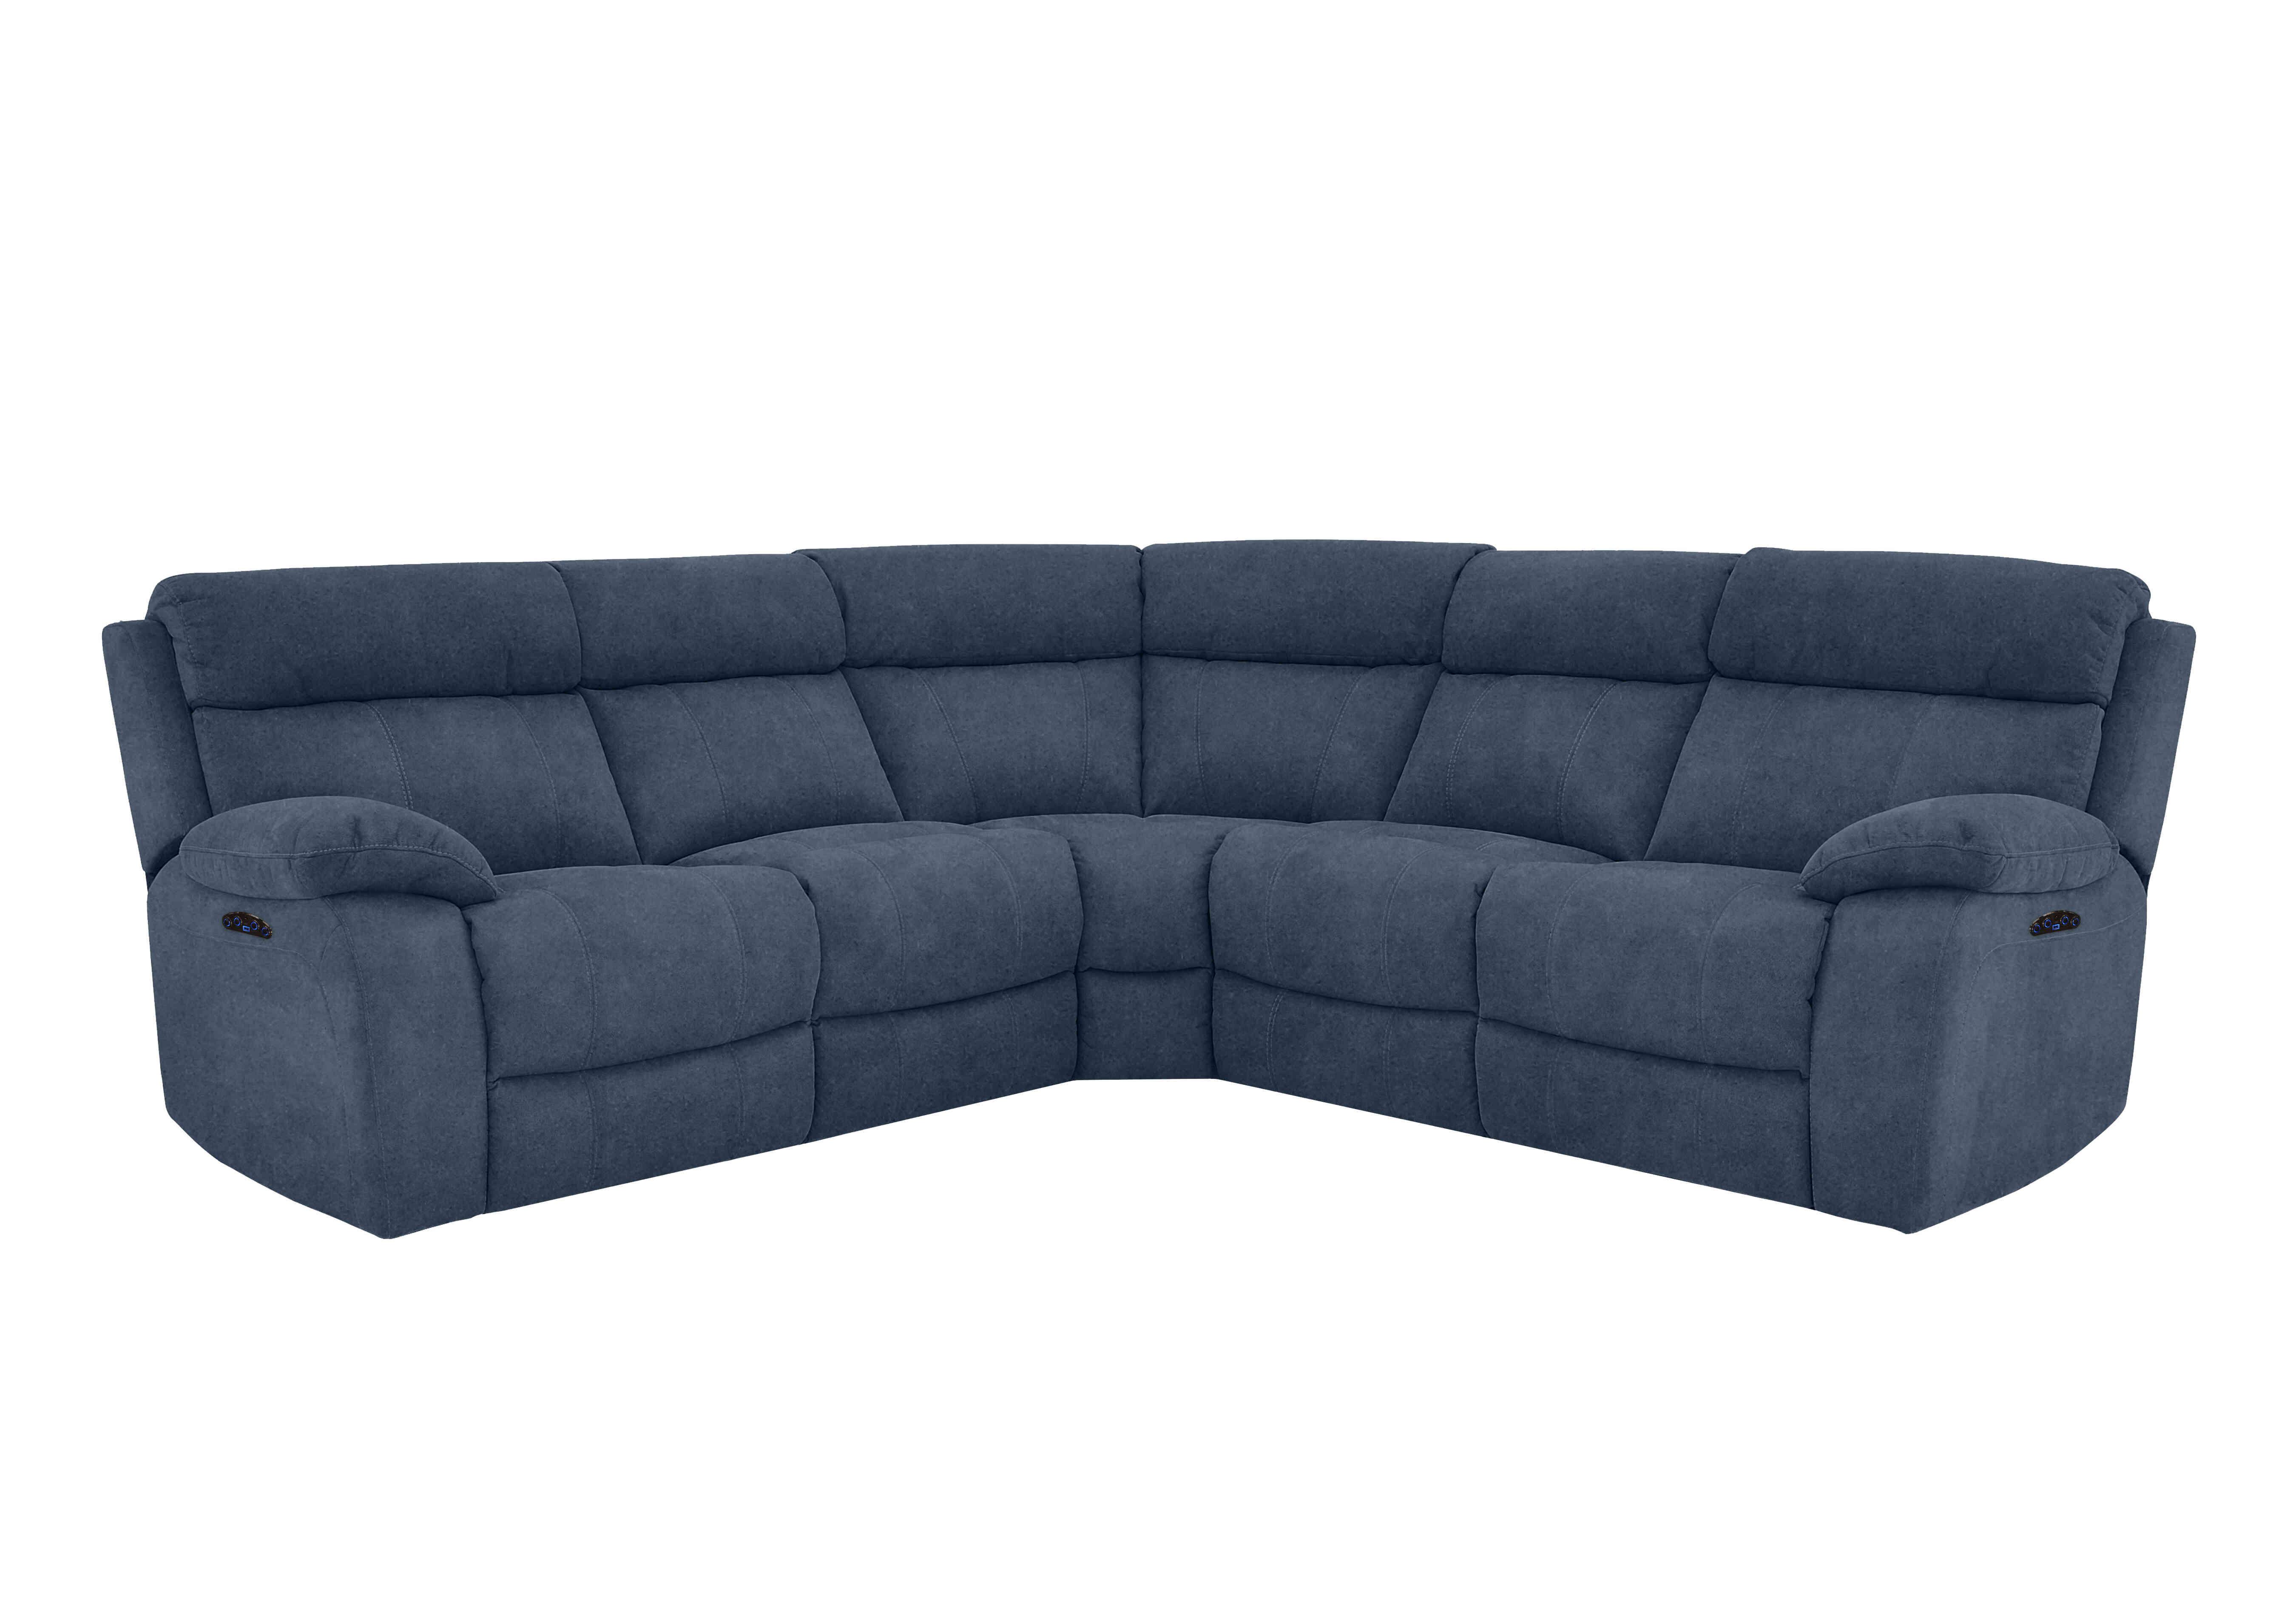 Moreno Fabric Power Recliner Corner Sofa with Power Headrests in Bfa-Blj-R10 Blue on Furniture Village